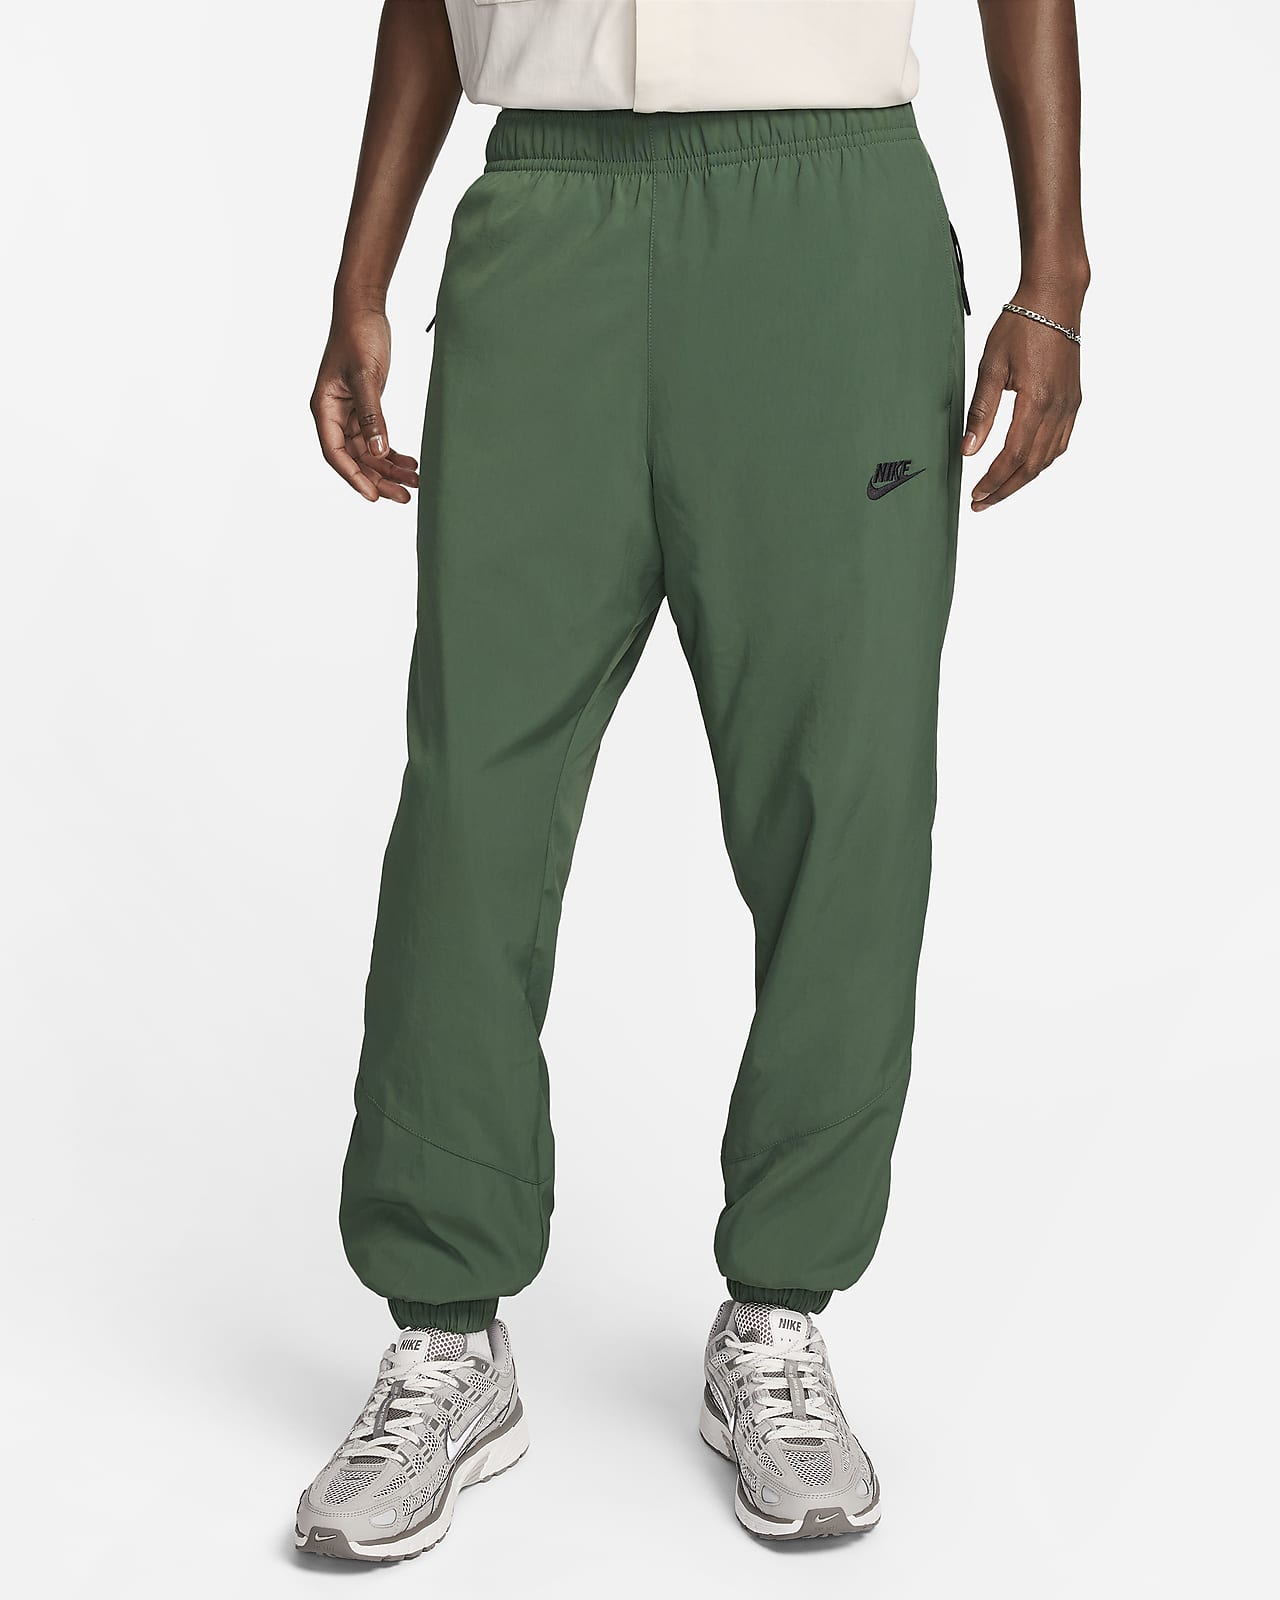 Pantaloni in tessuto per l'inverno Nike Windrunner – Uomo